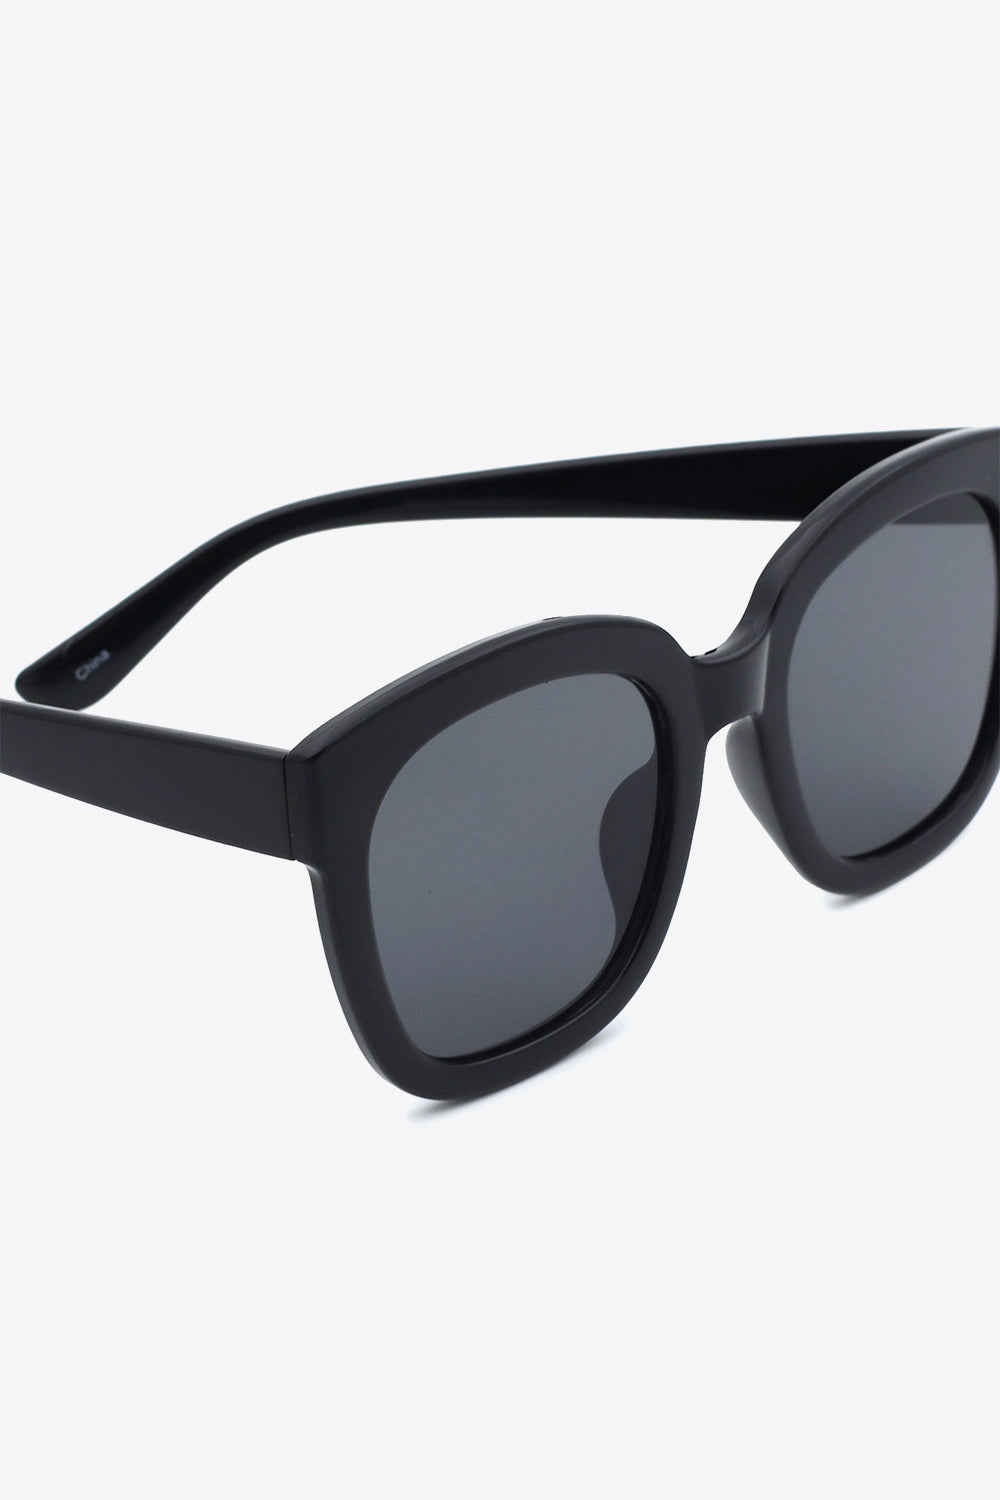 Dark Slate Gray Polycarbonate Frame Square Sunglasses Accessories